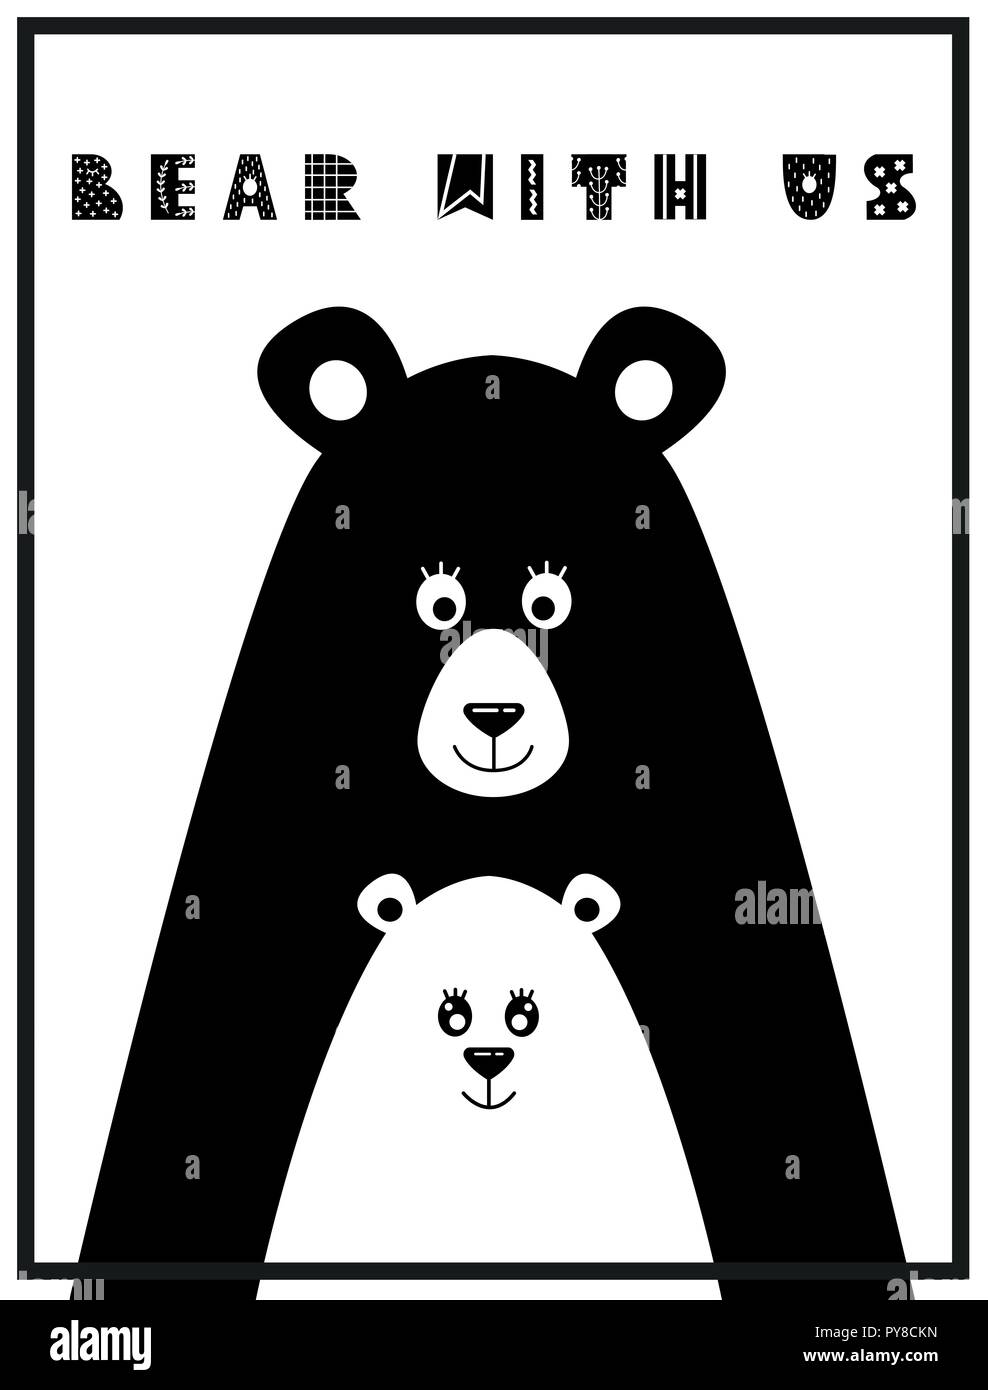 Bear With Us Poster S.jpg - PY8CKN Stock Photo